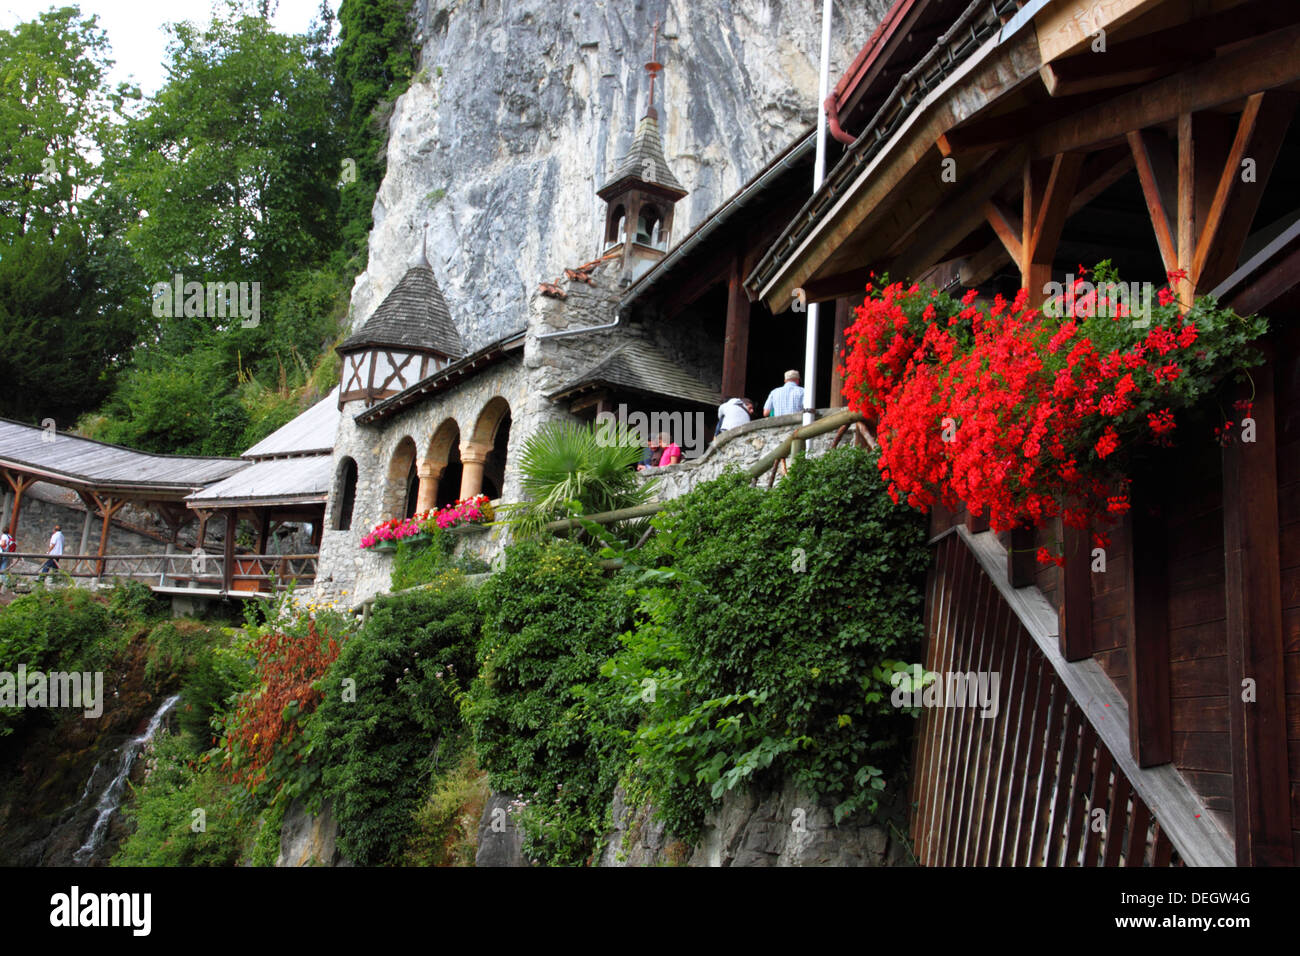 Entrance to St Beatus Caves.Lake Thun, Switzerland. Stock Photo